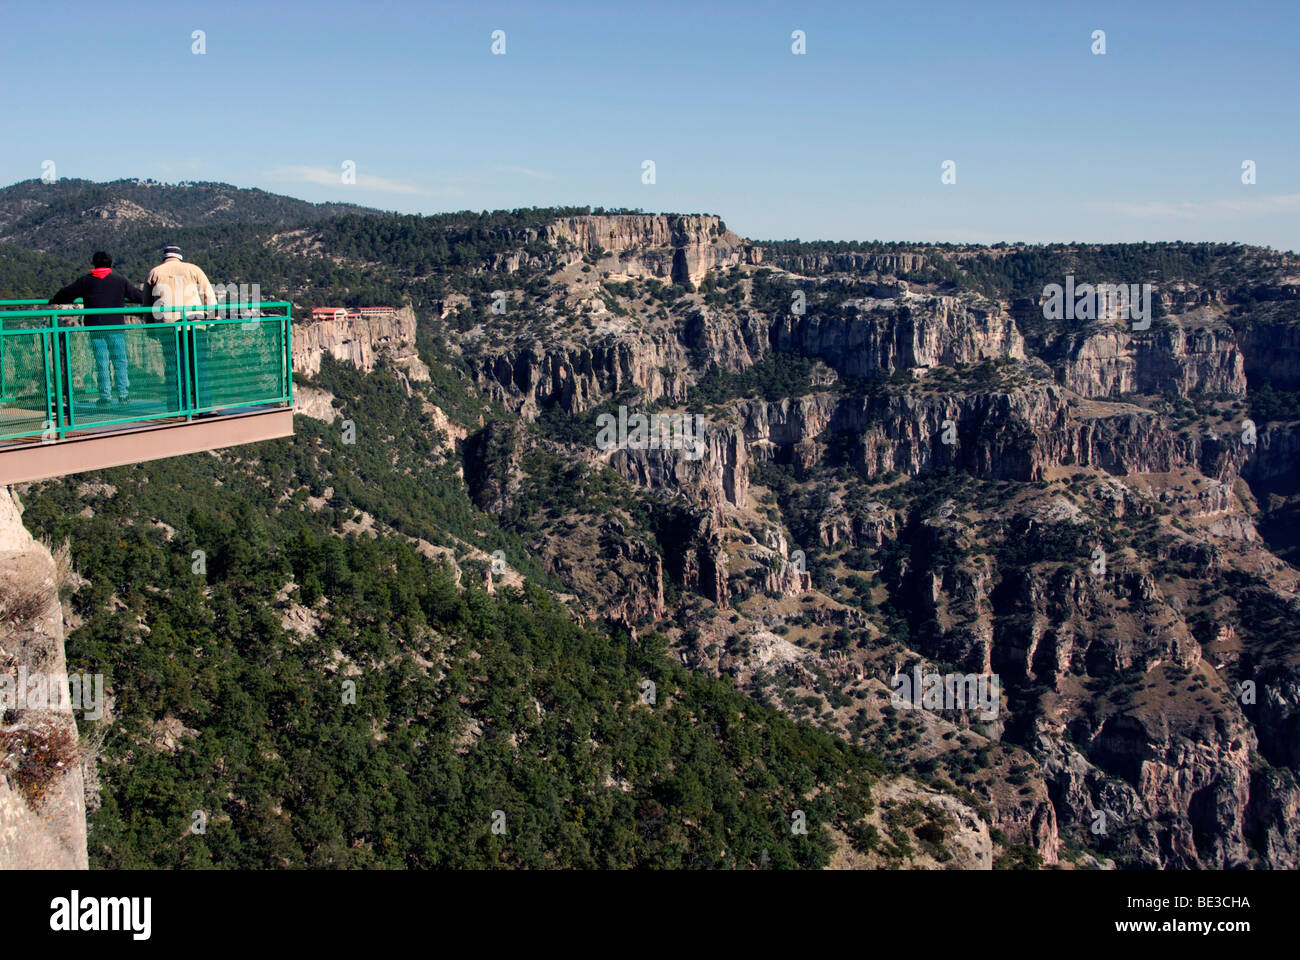 Aussichtsplattform mit Blick auf Copper Canyon, Chihuahua, Mexiko Stockfoto